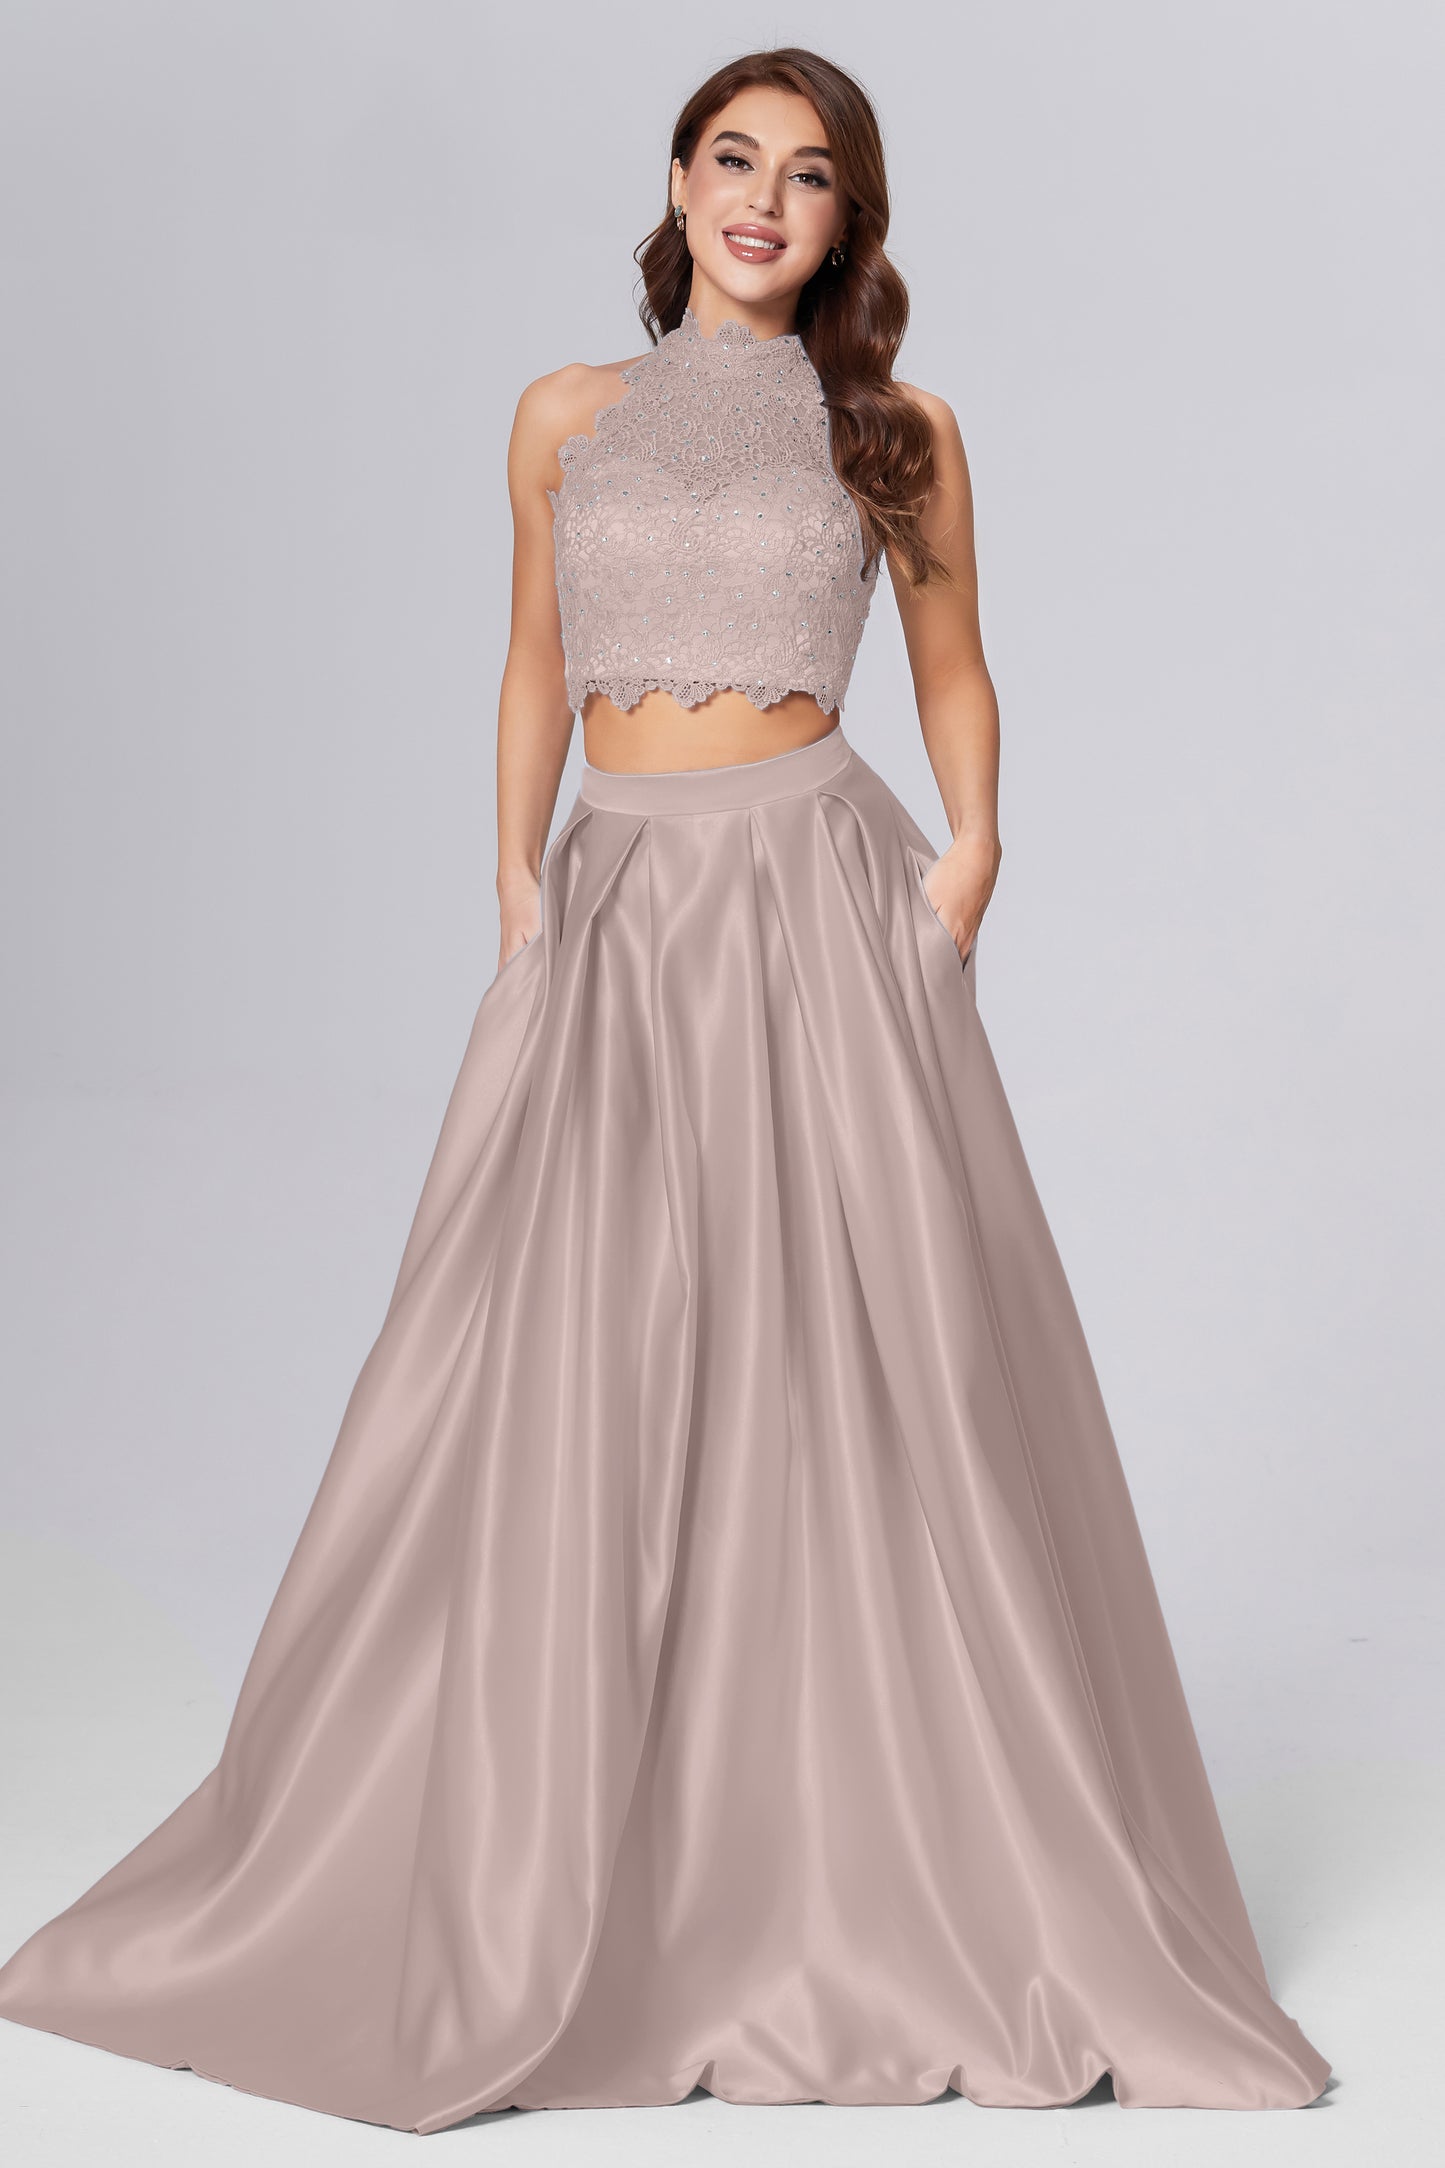 Halter 2-Piece Sleeveless Prom Dresses